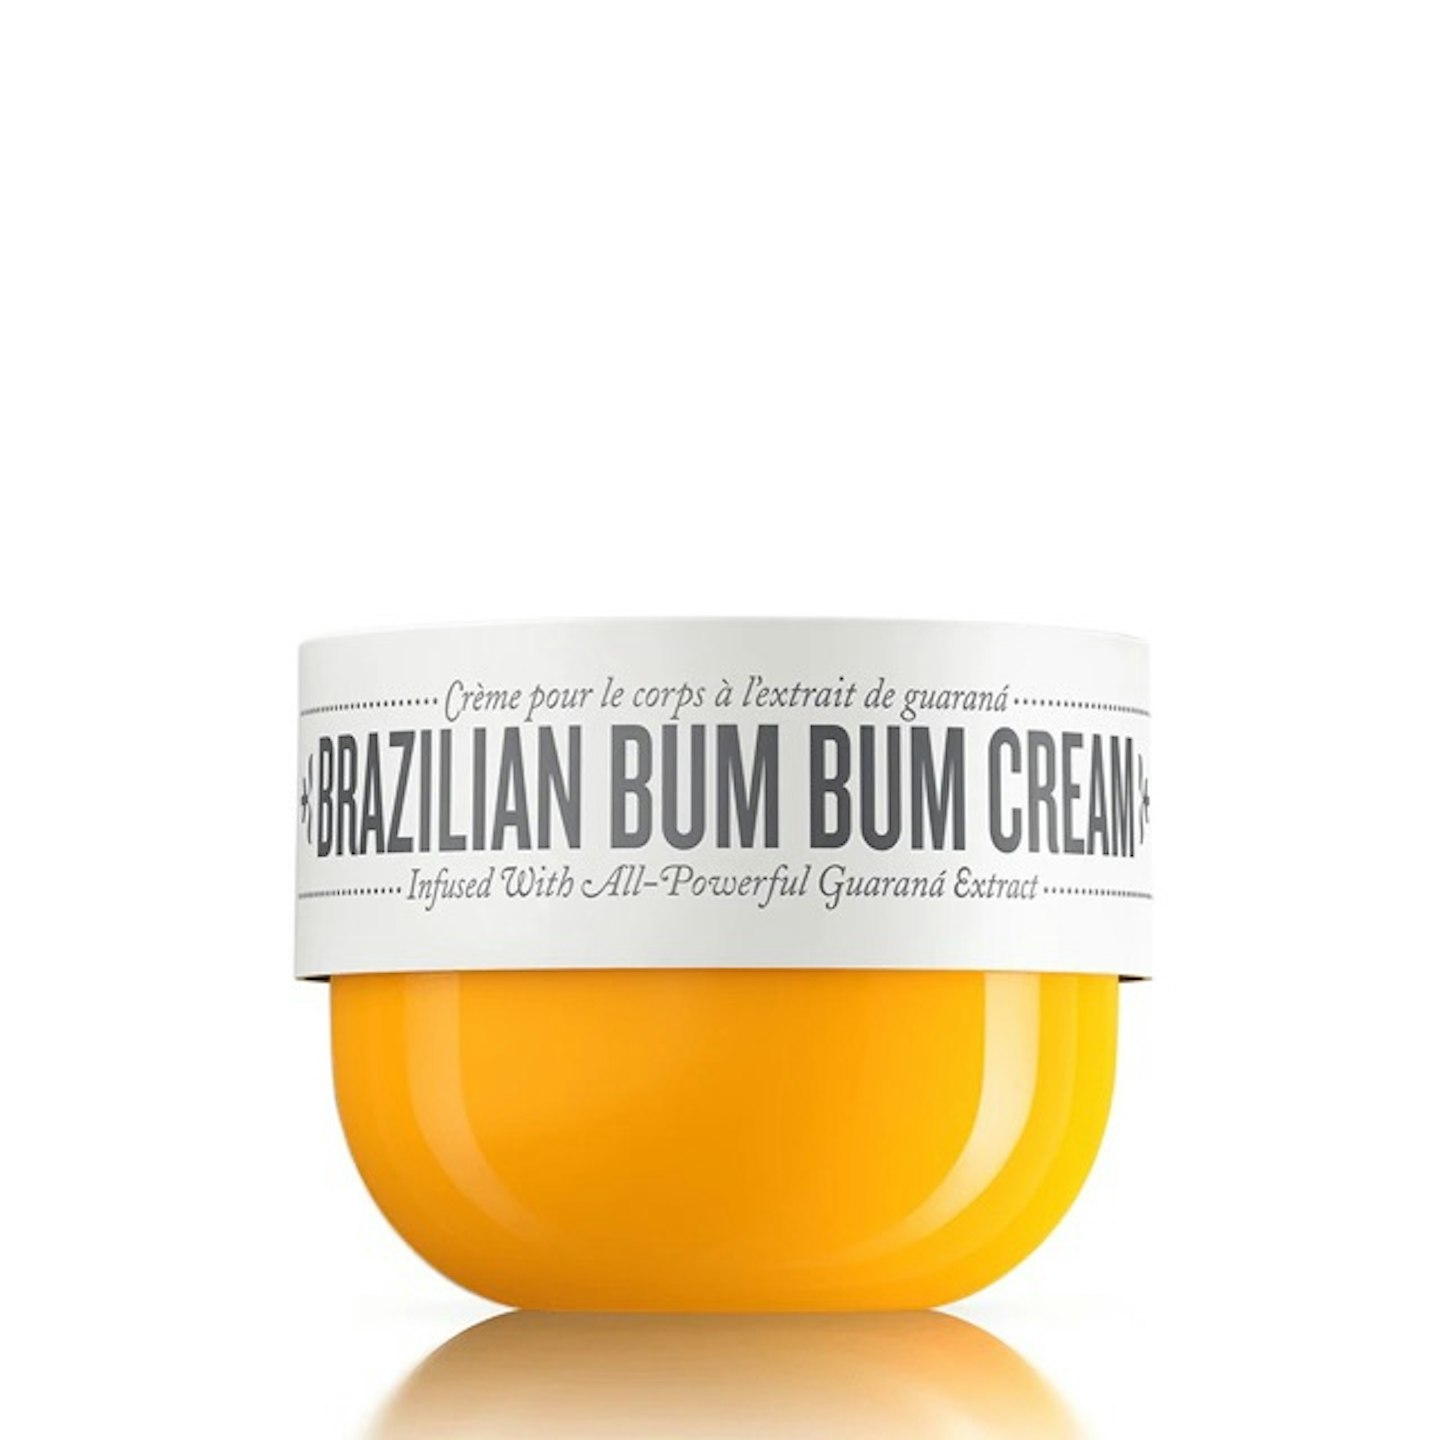 Sol de Janeiro's Brazilian Bum Bum Cream